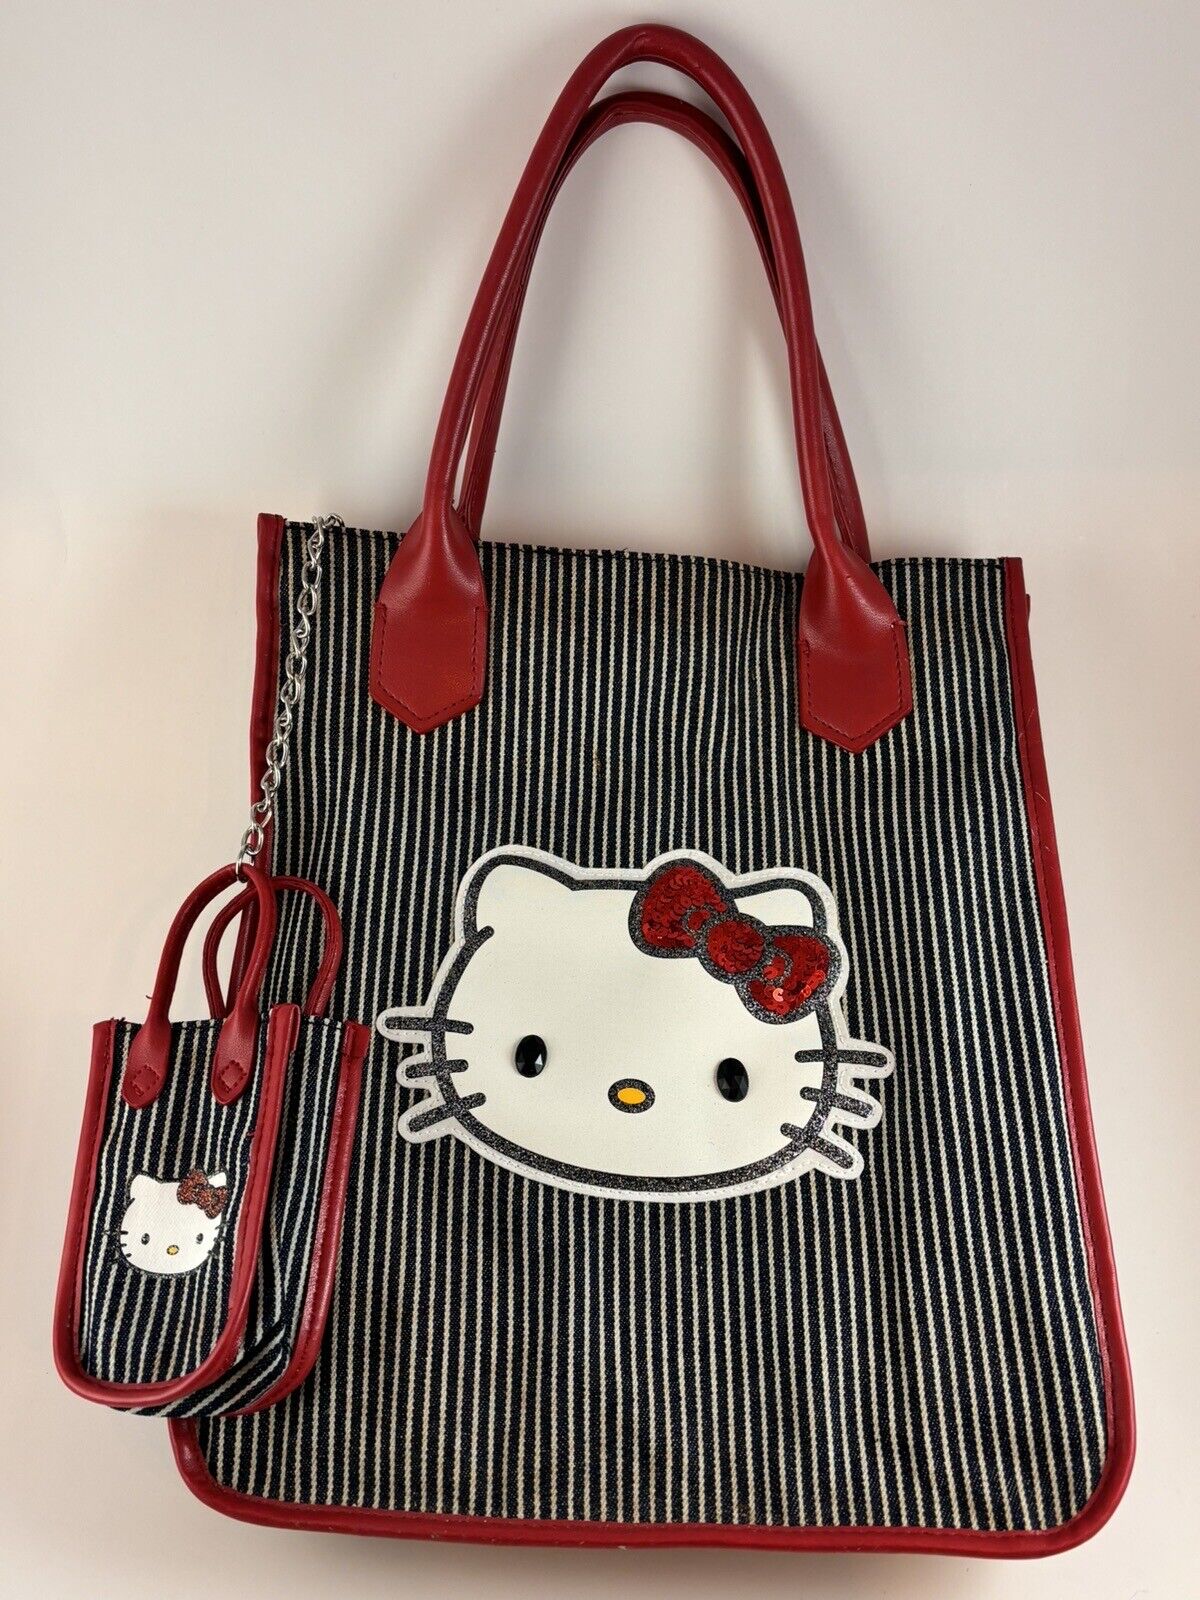 VTG Sanrio Hello Kitty Tote Bag with micro matching tote striped red trim EUC